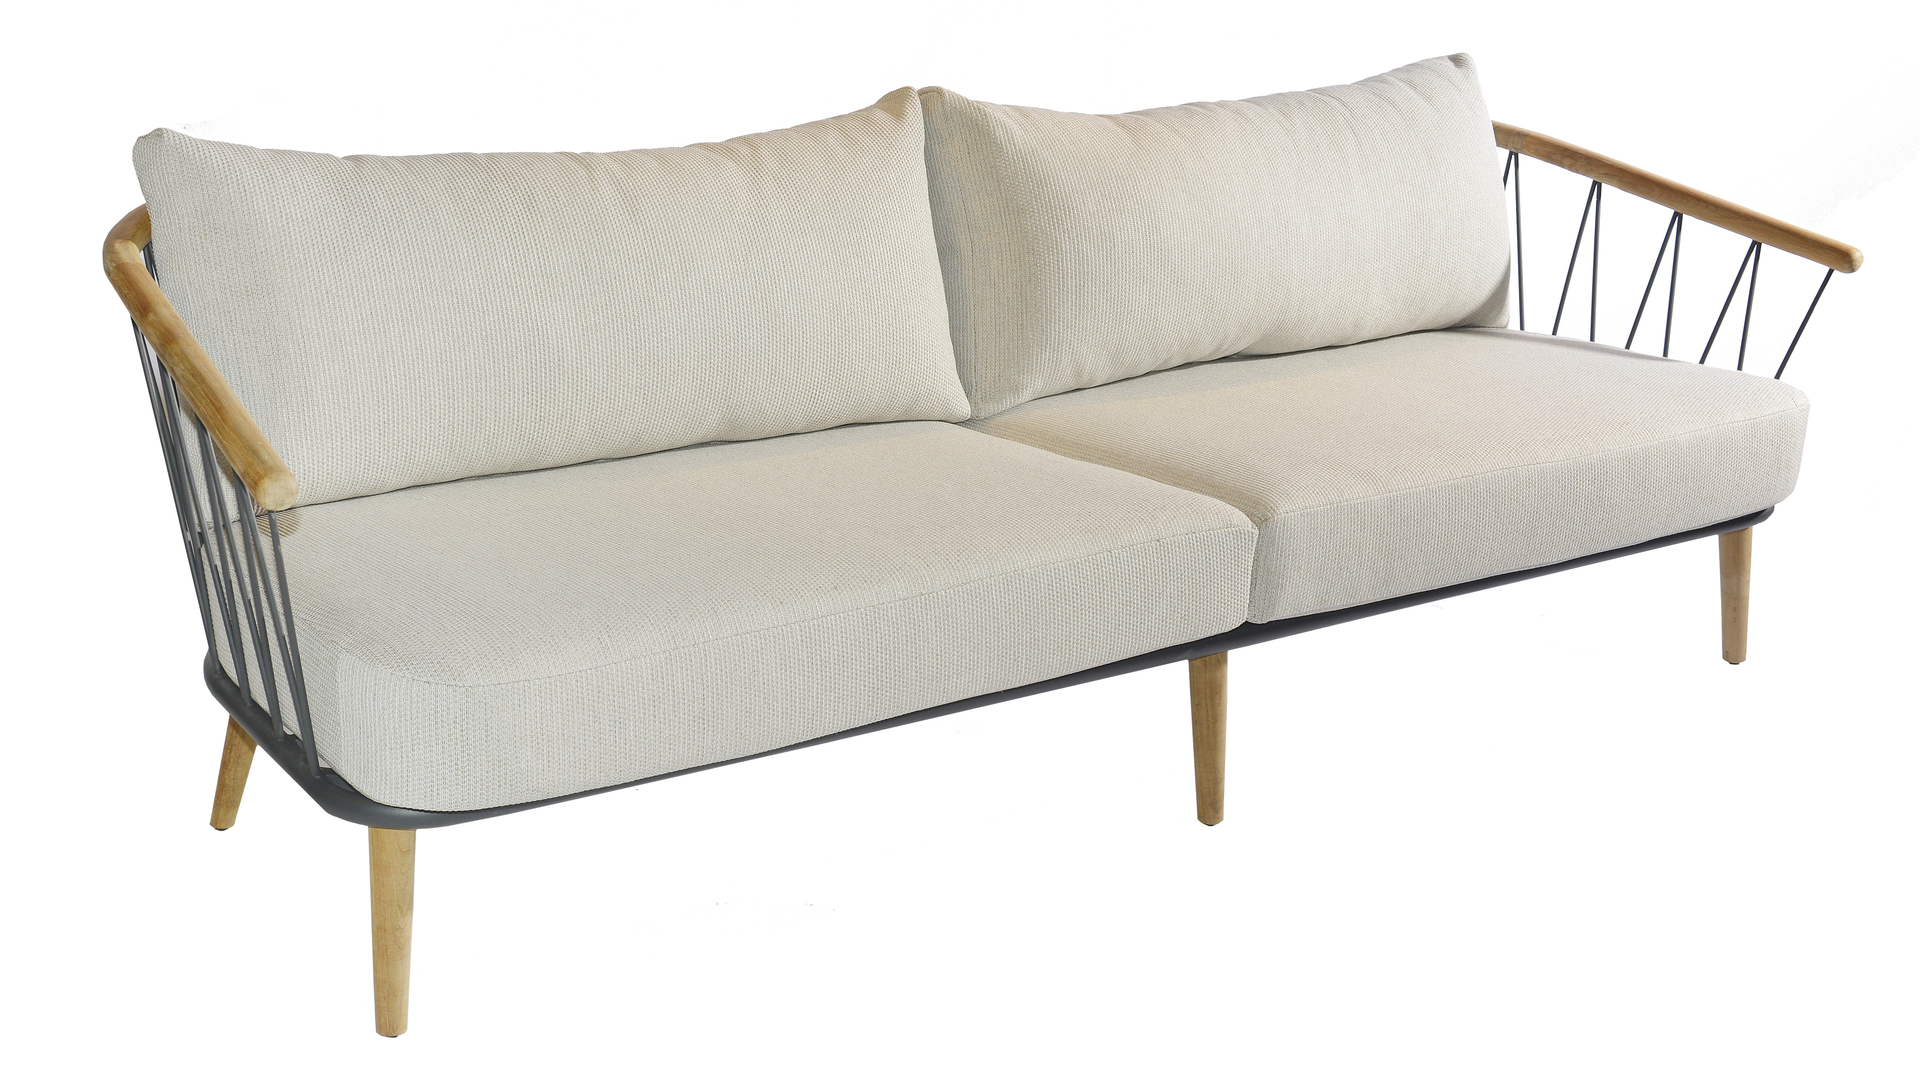 2021 Borek teak alu Coimbra sofa by Jan-Willem van Elten 7391.jpg